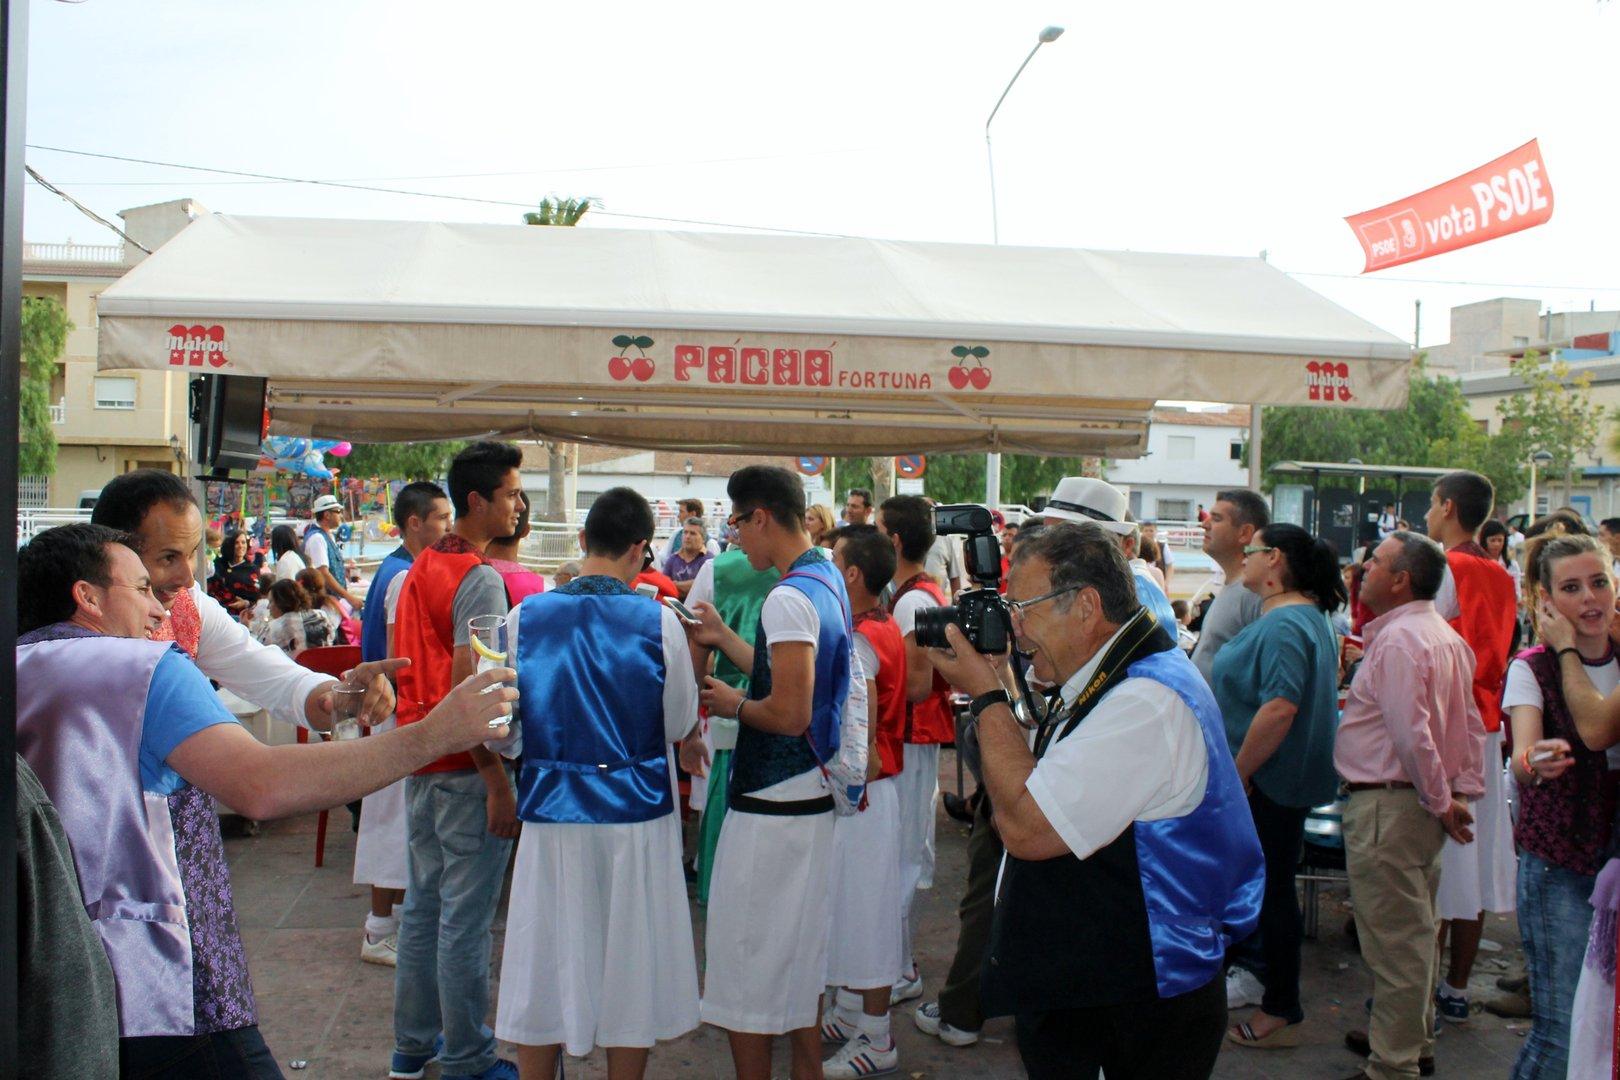 Fiestas de San Isidro 2014 de Fortuna en Pacha Fortuna